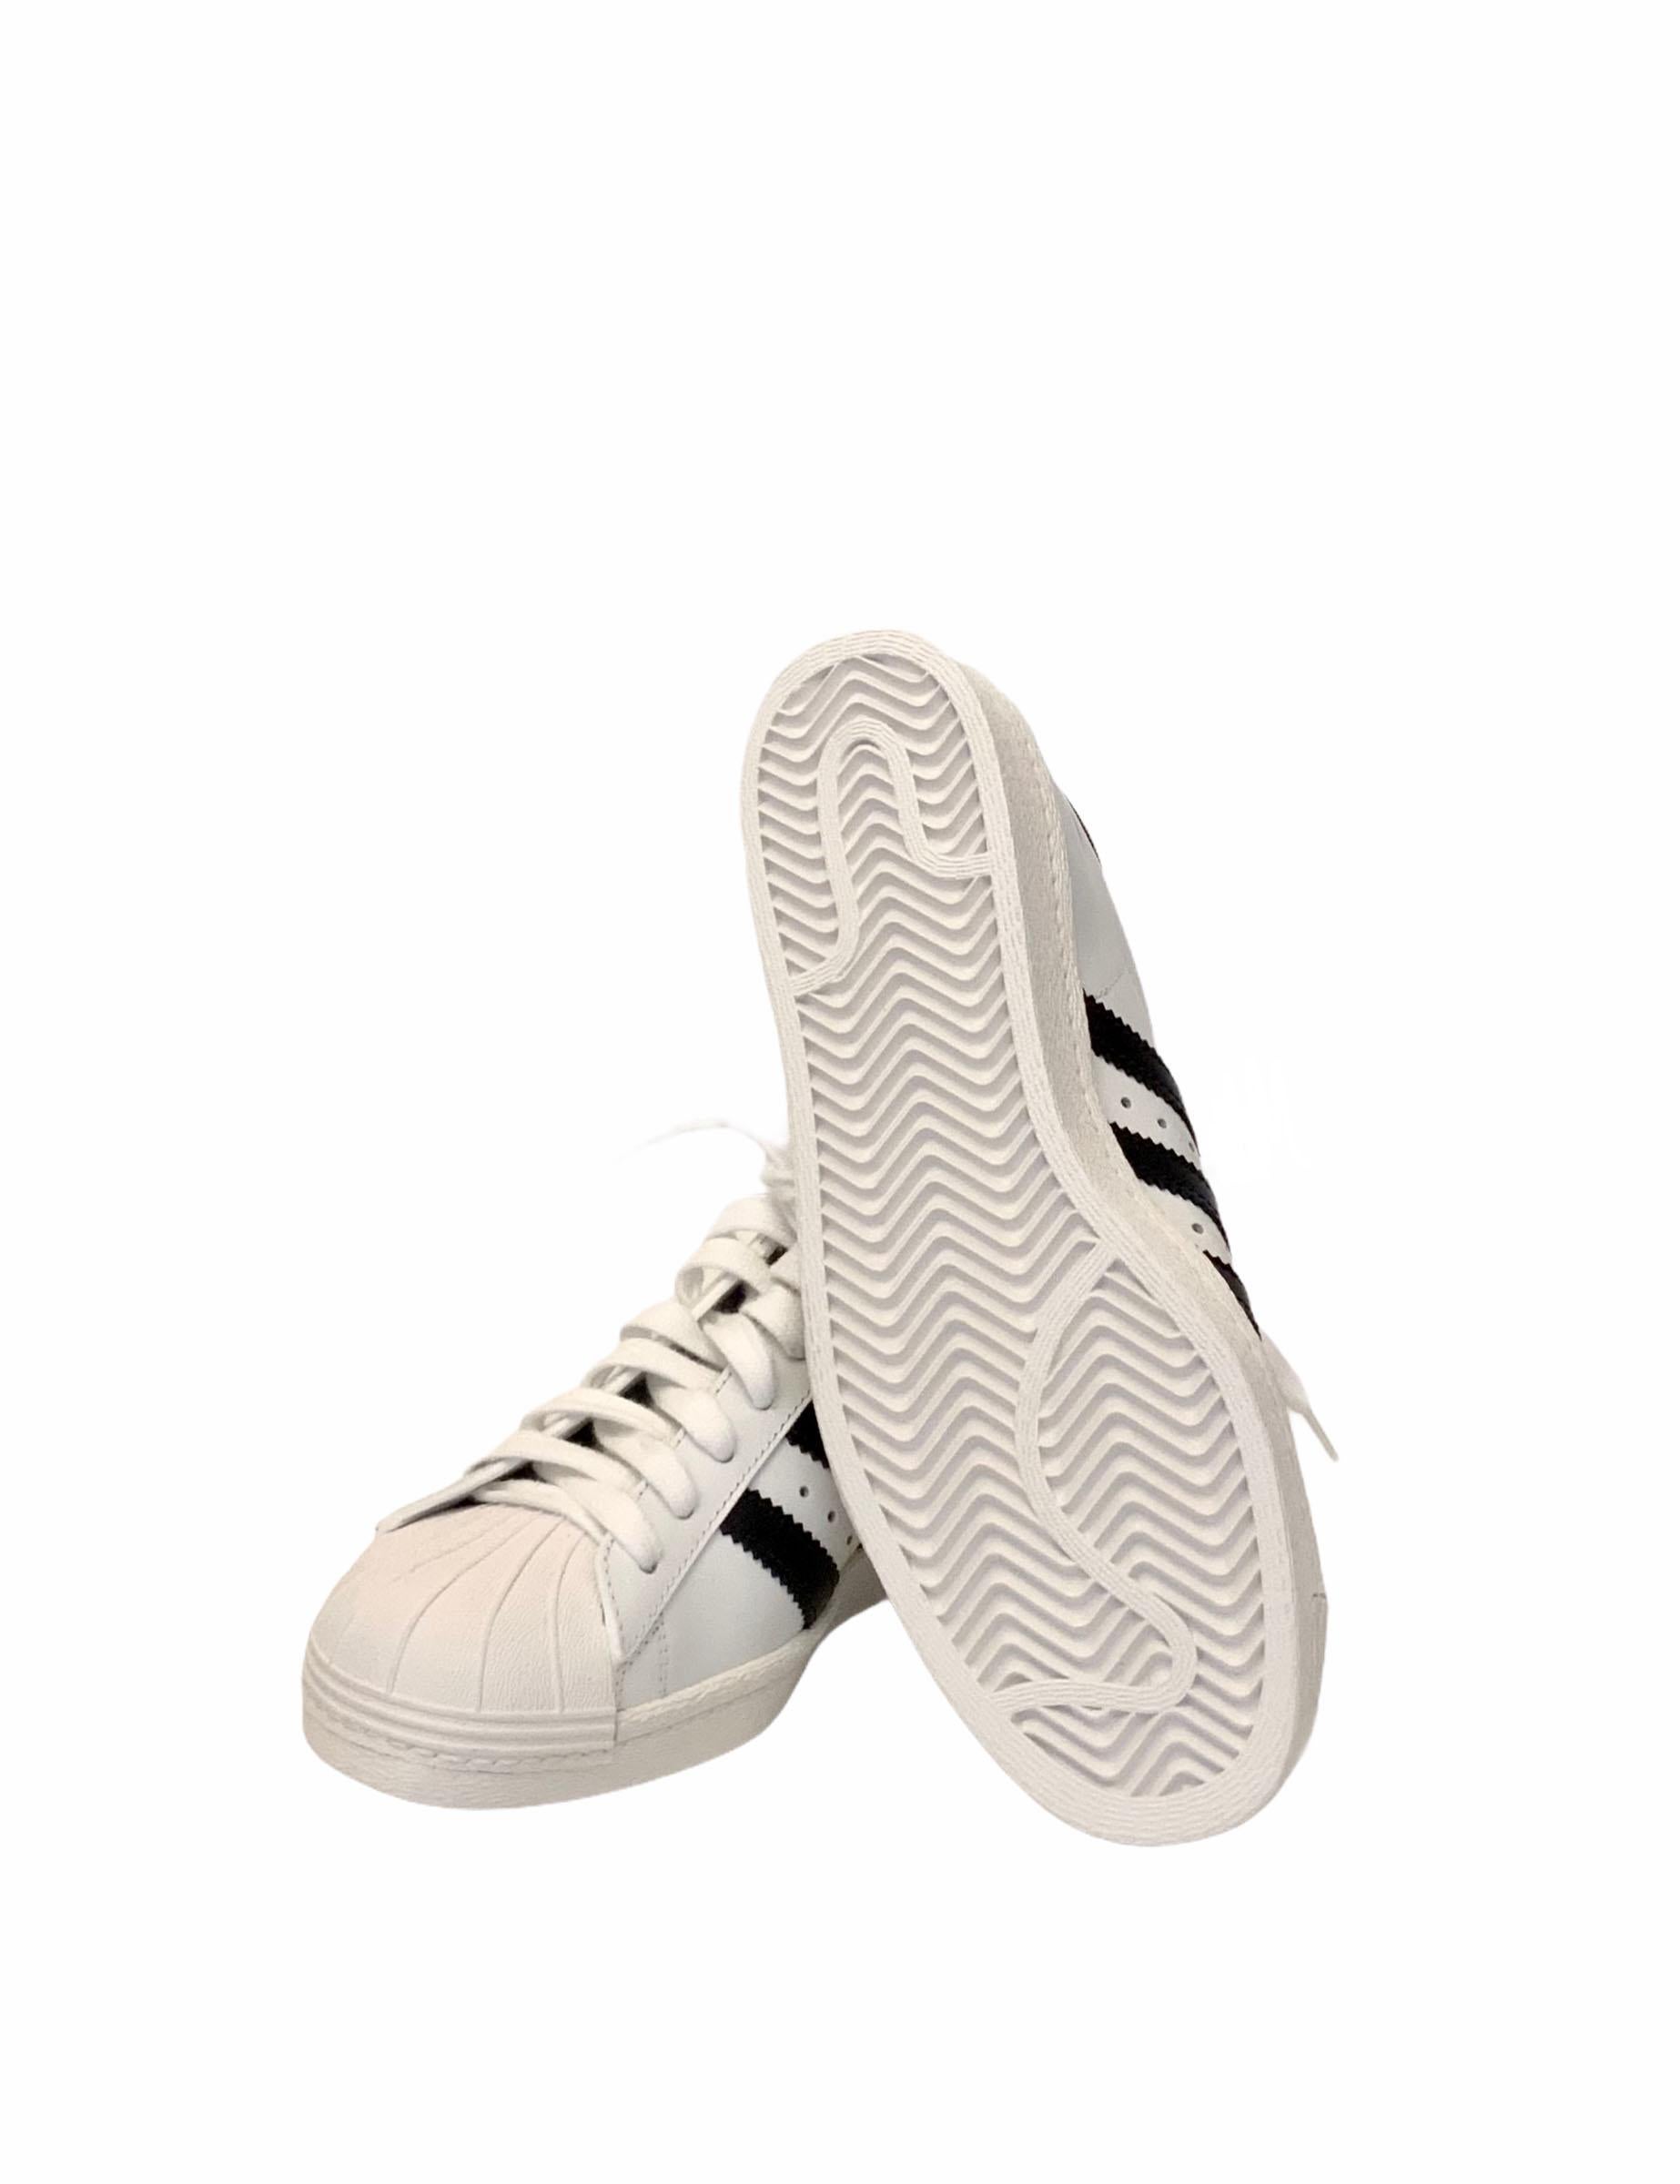 Prada White and Black Adidas Superstar Sneakers 1